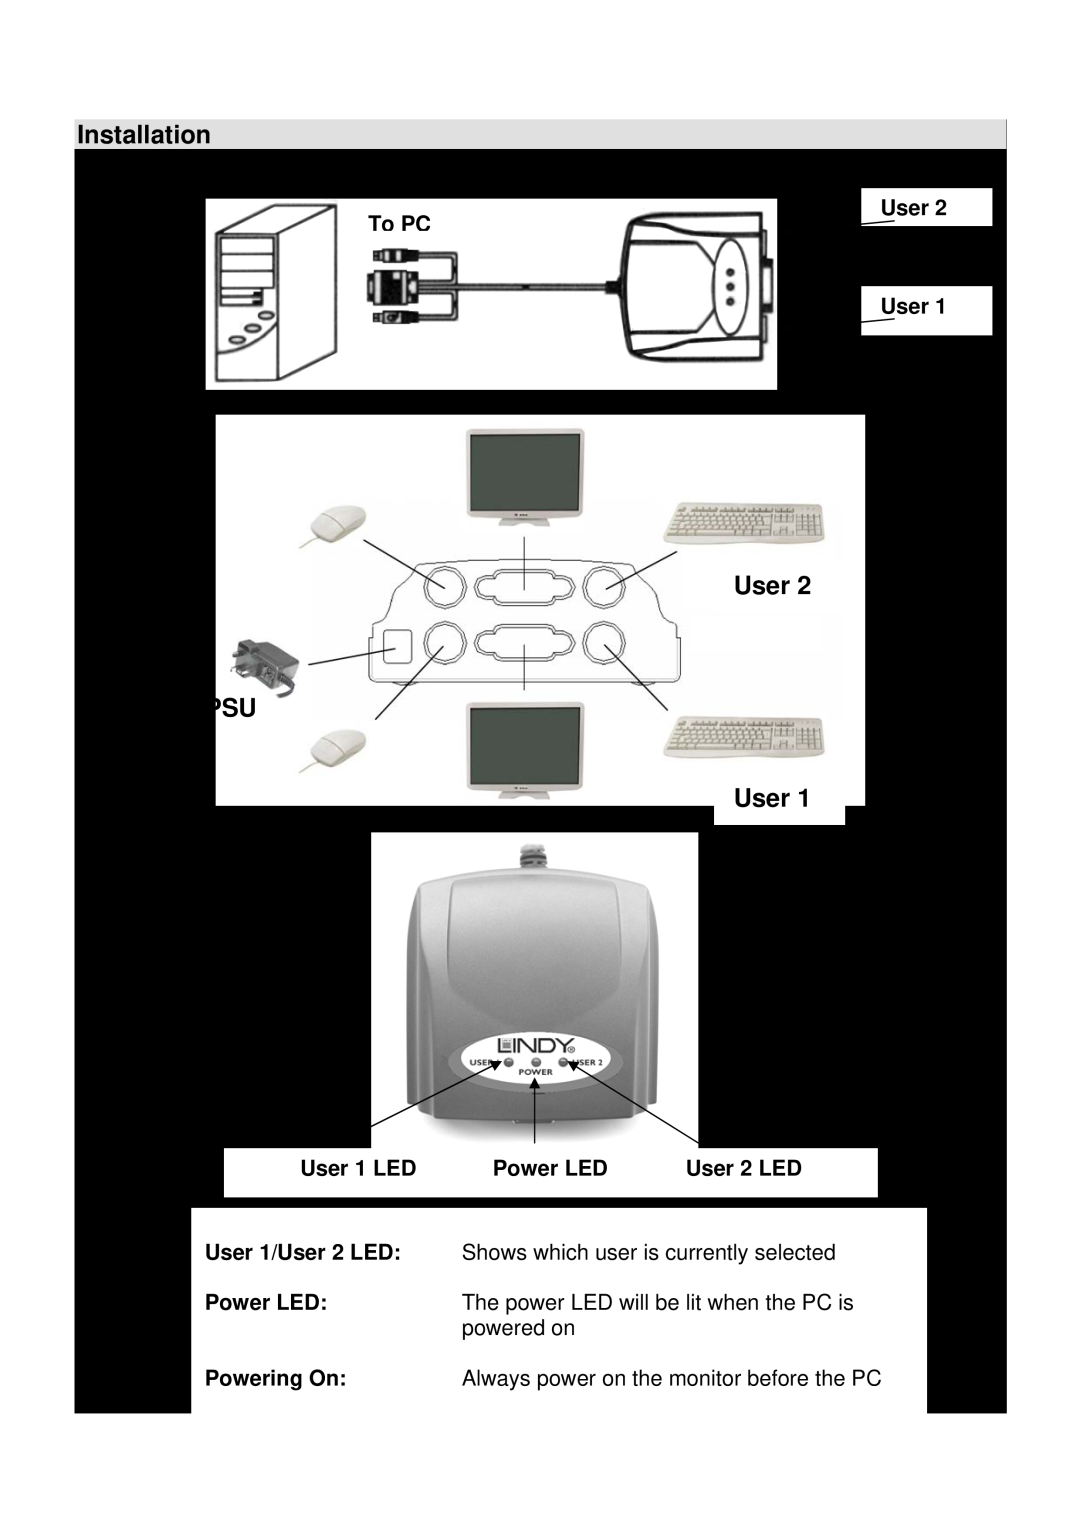 Lindy 39122 user manual Installation, User PSU User, To PC, User User, User 1 LED, Power LED, User 2 LED 